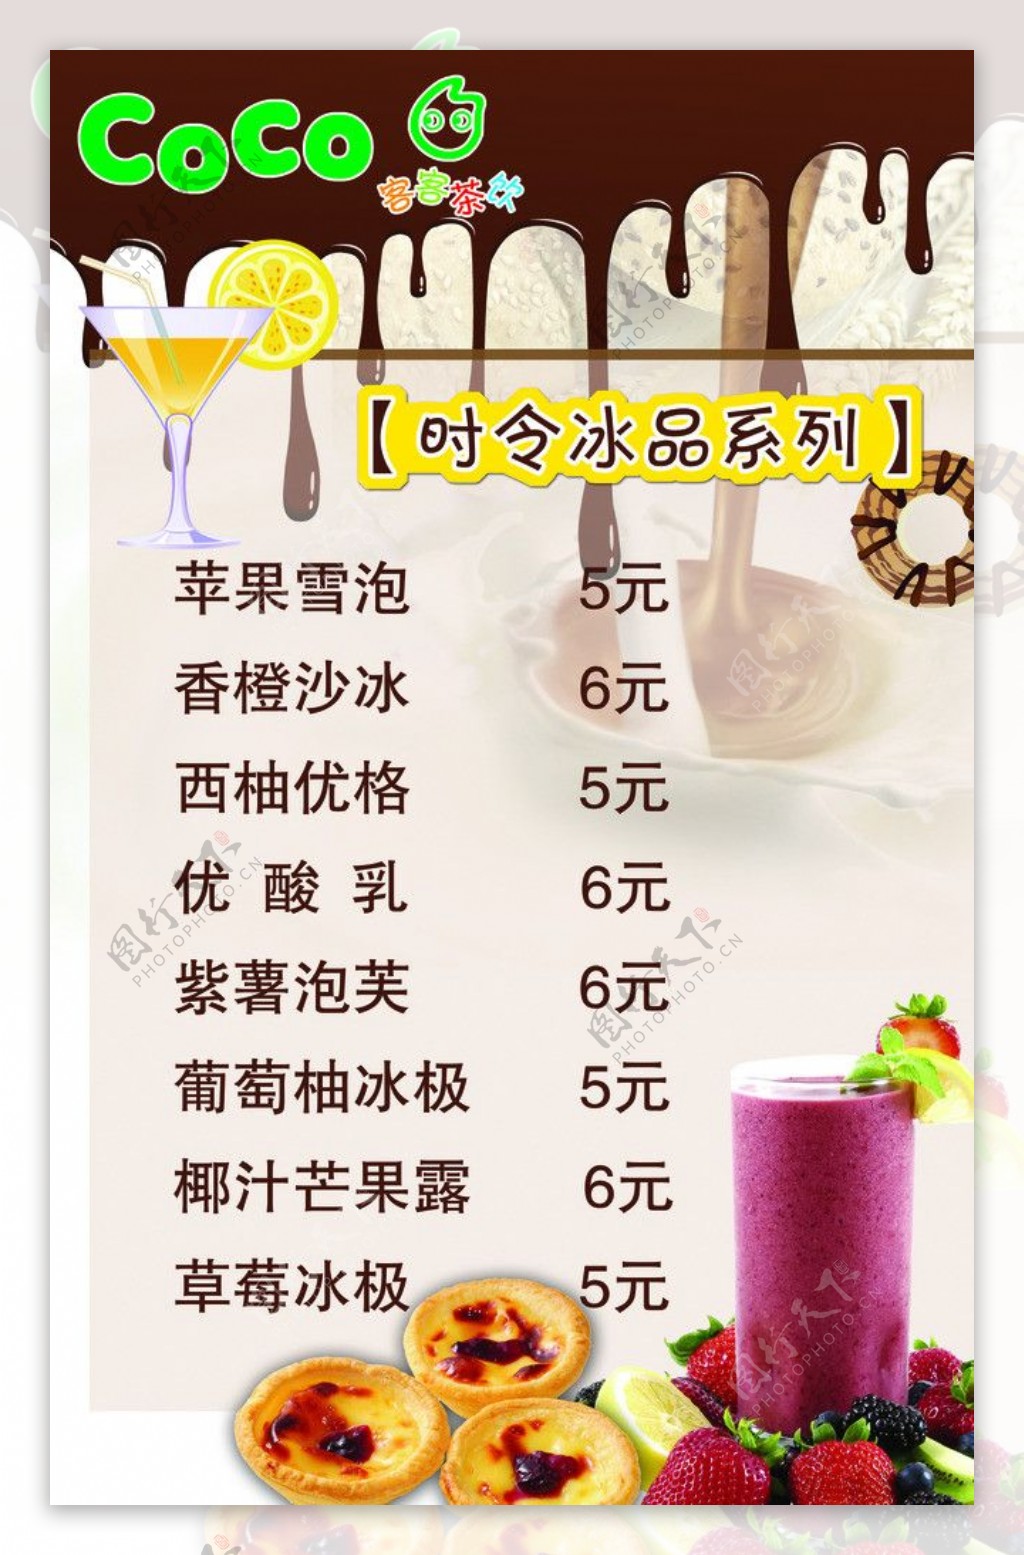 COCO客客茶饮菜谱图片